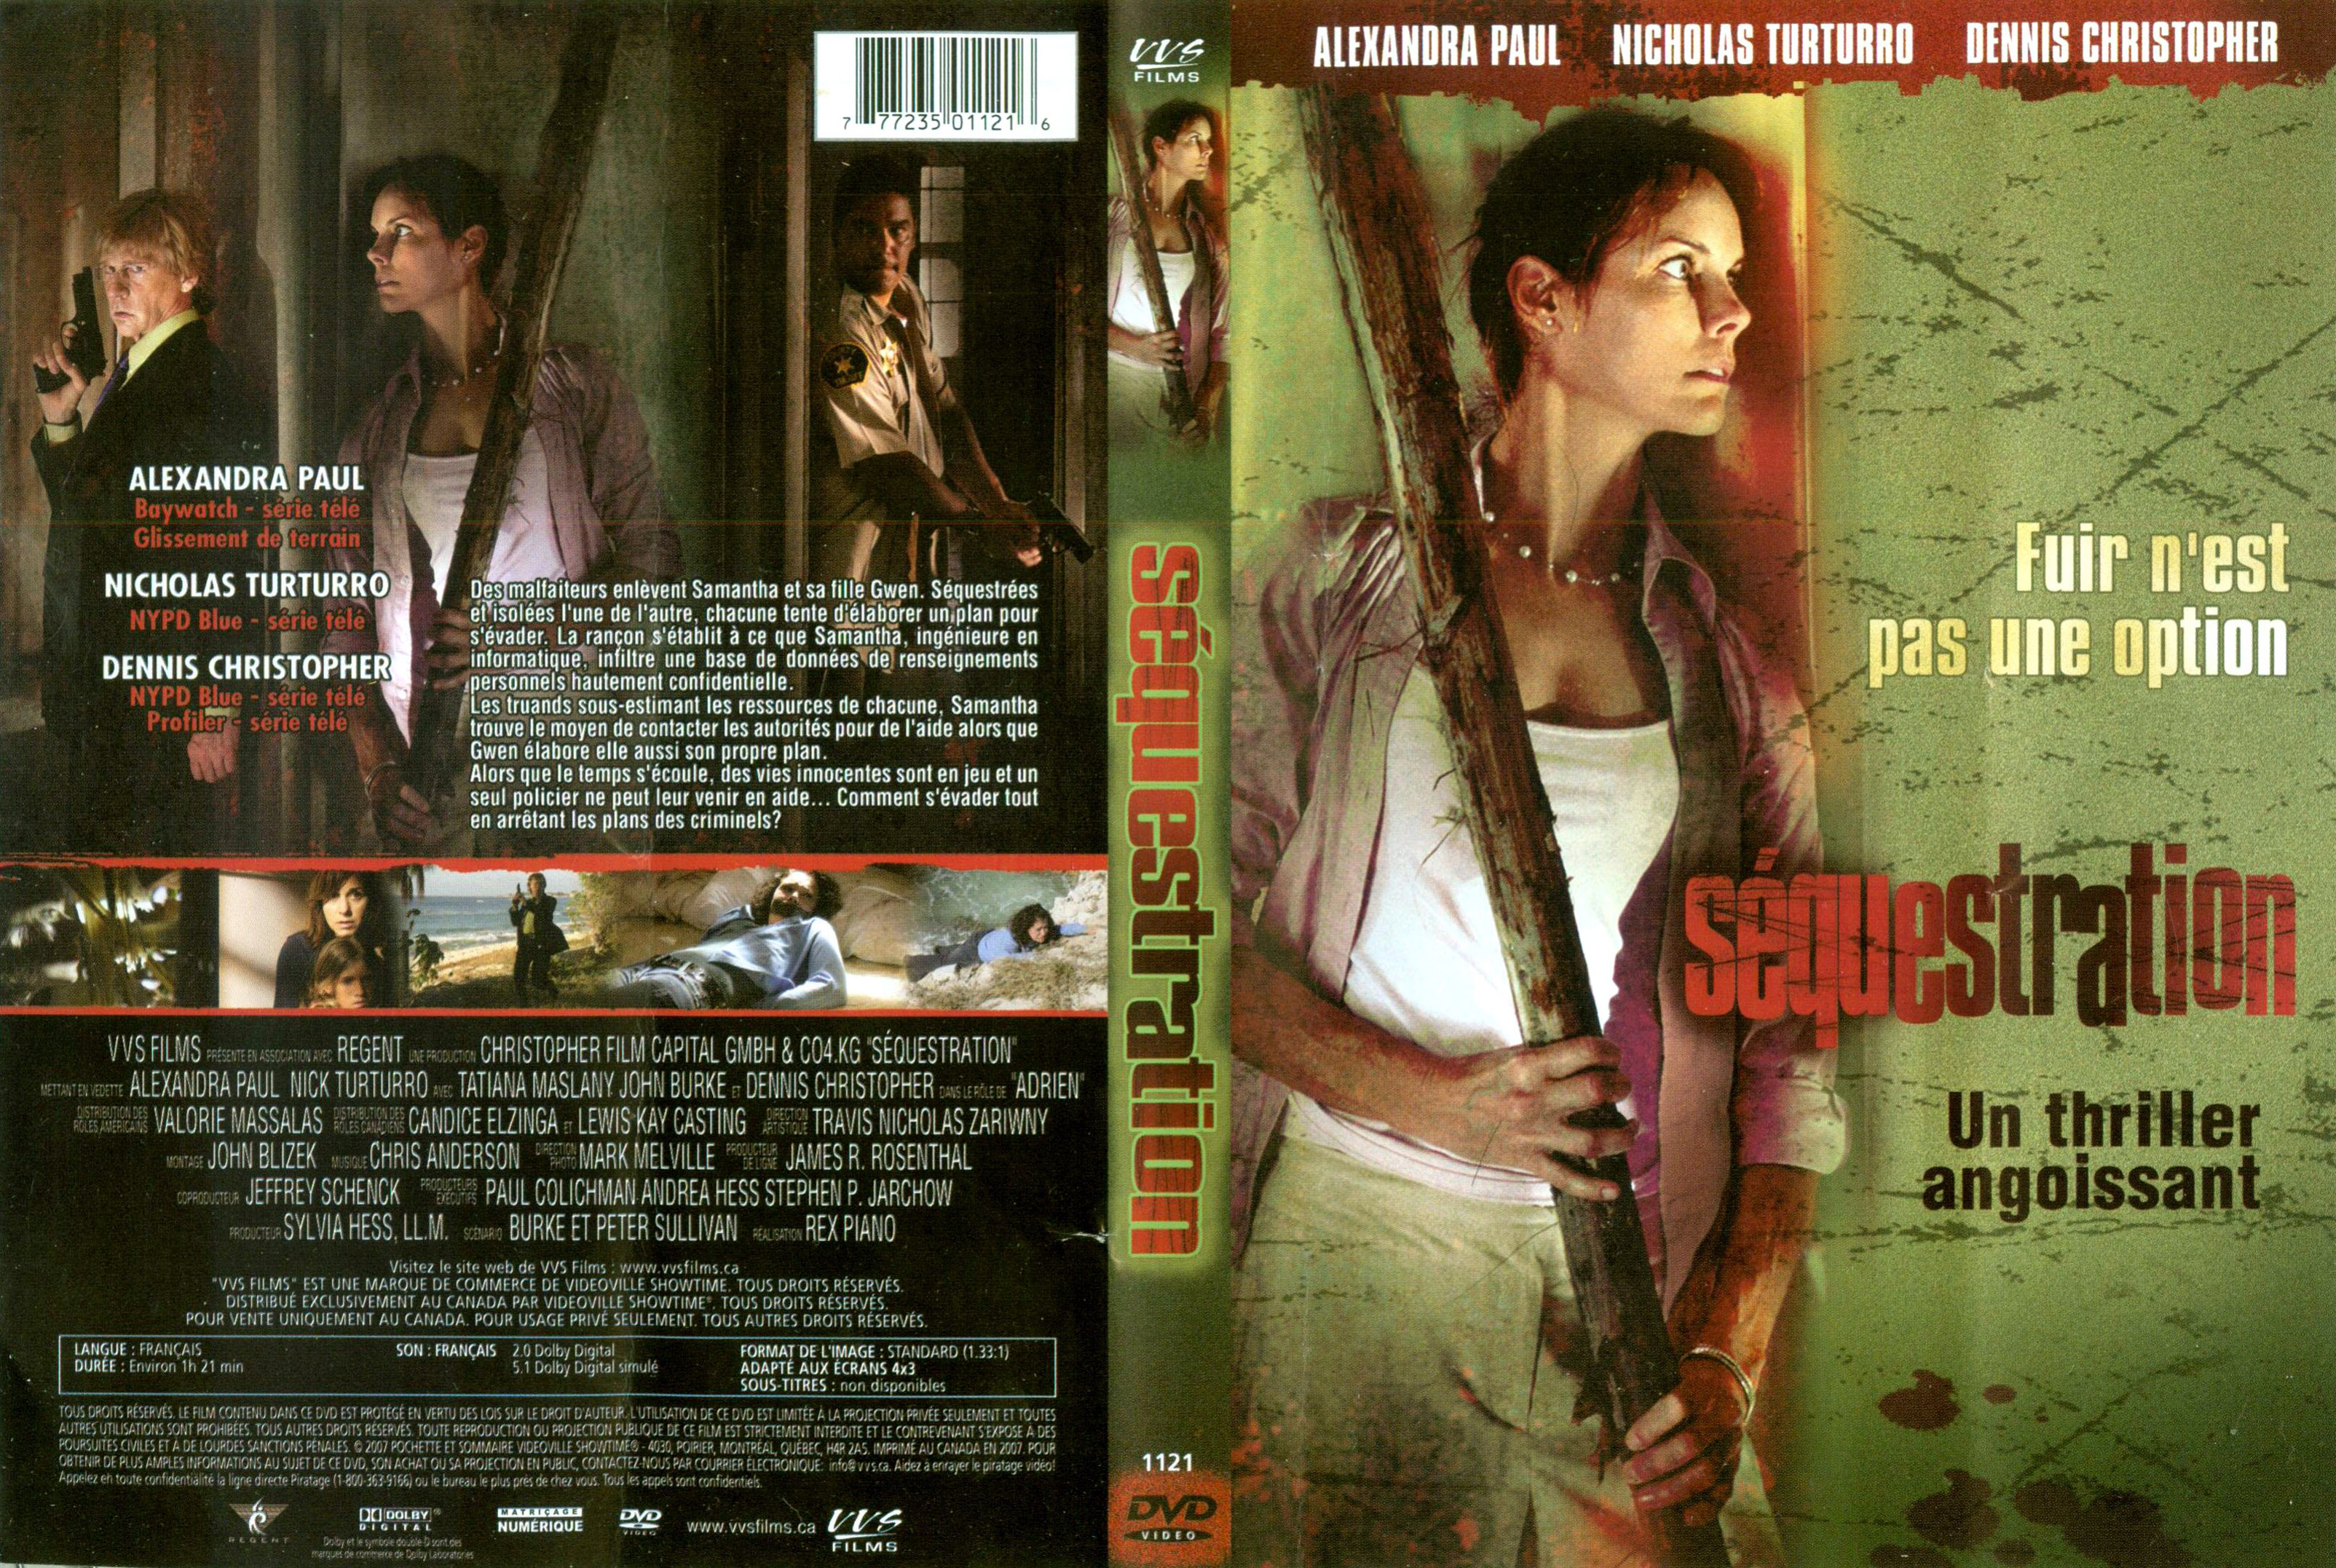 Jaquette DVD Sequestration